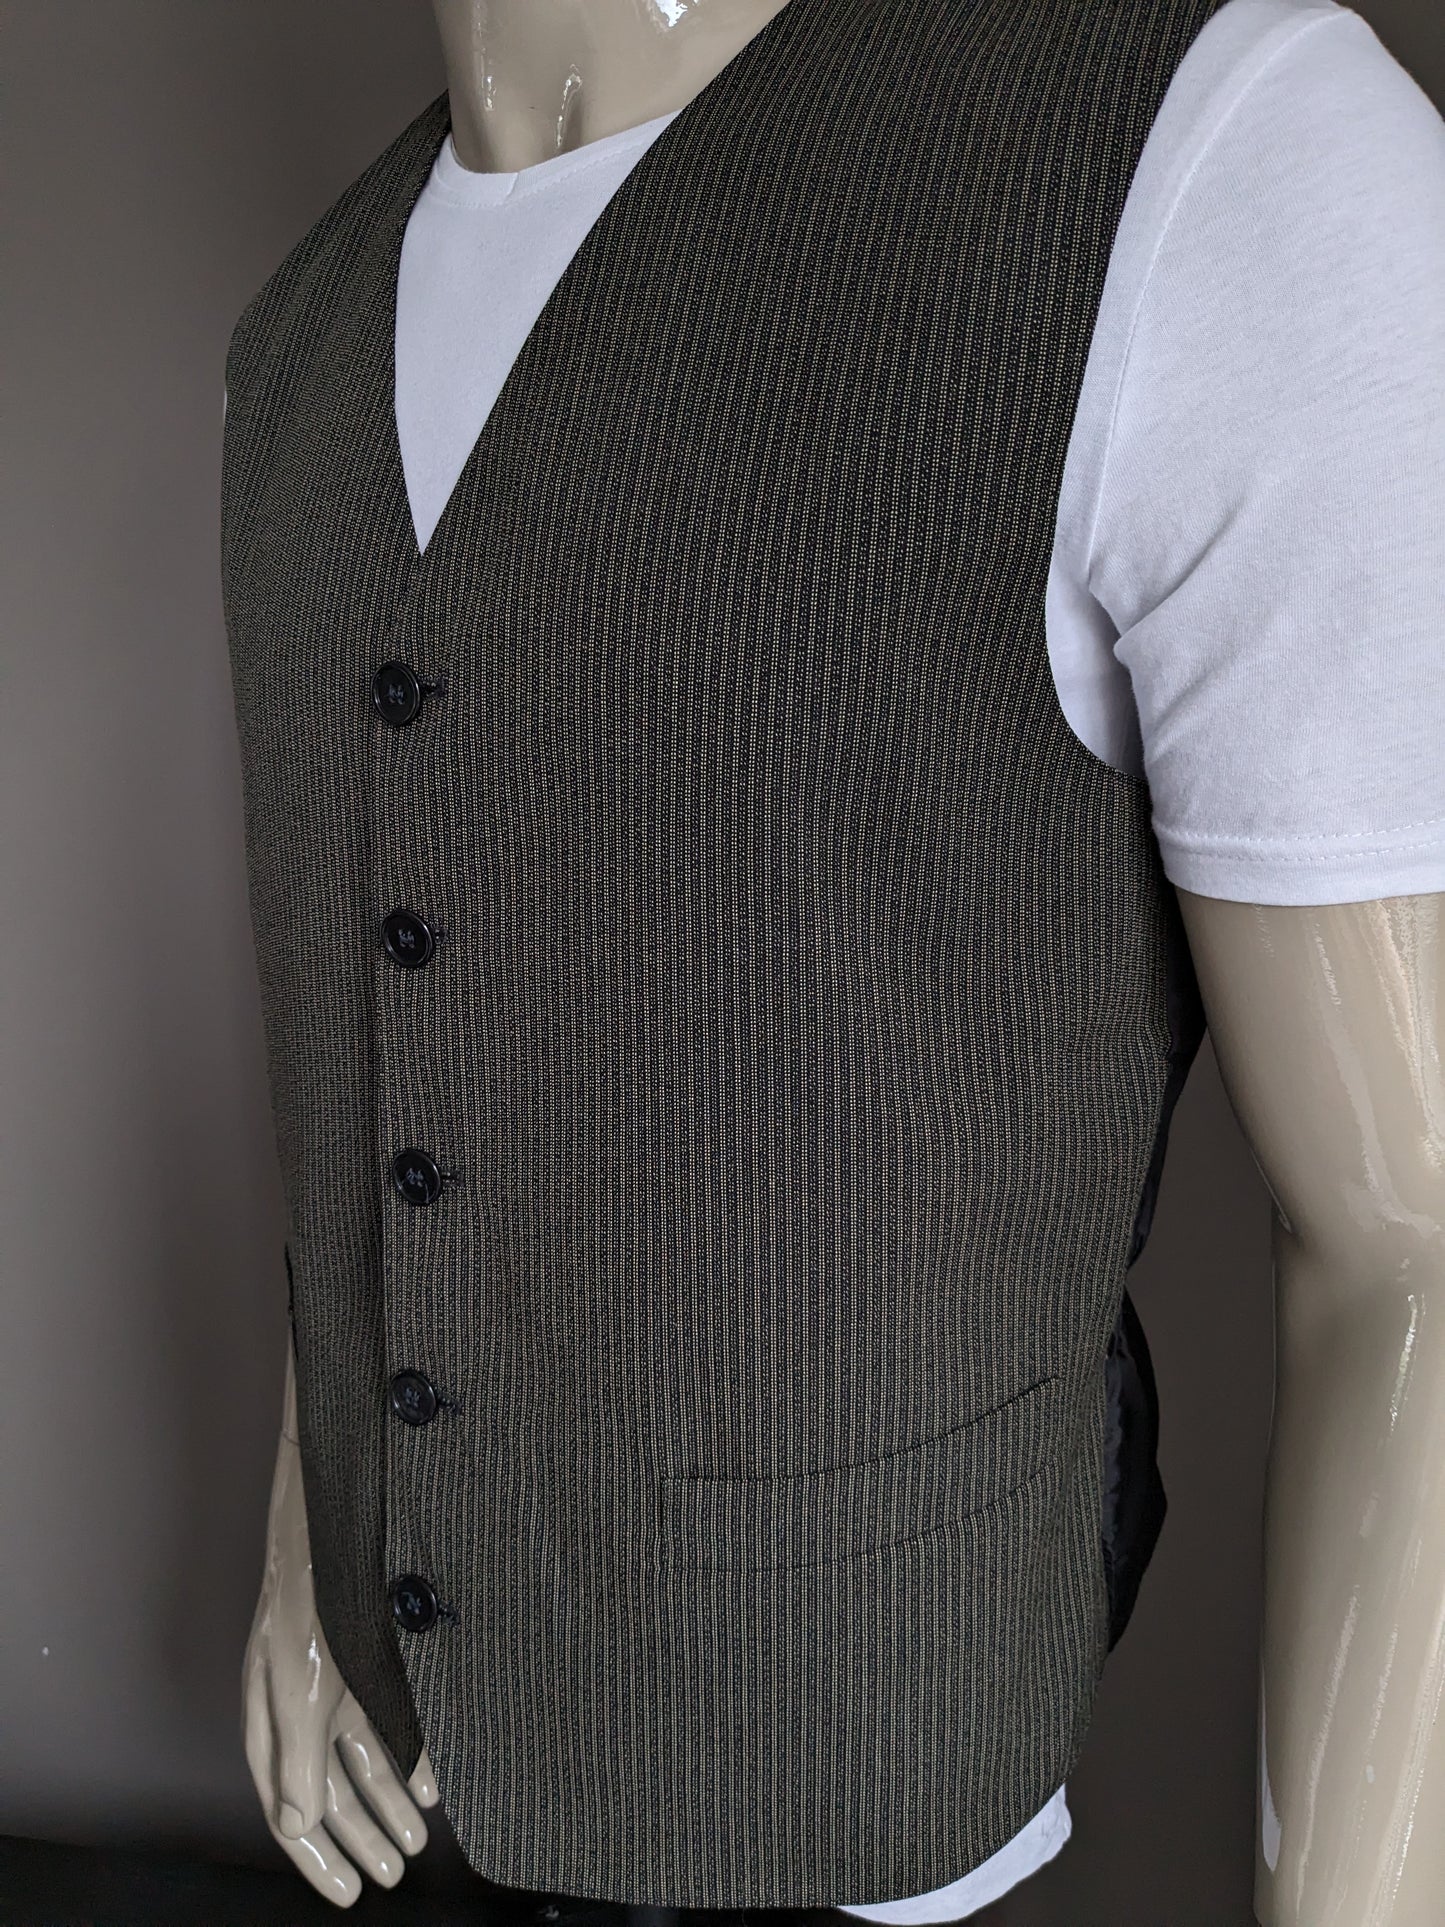 Waistcoat. Gray black striped. Size L. #329.